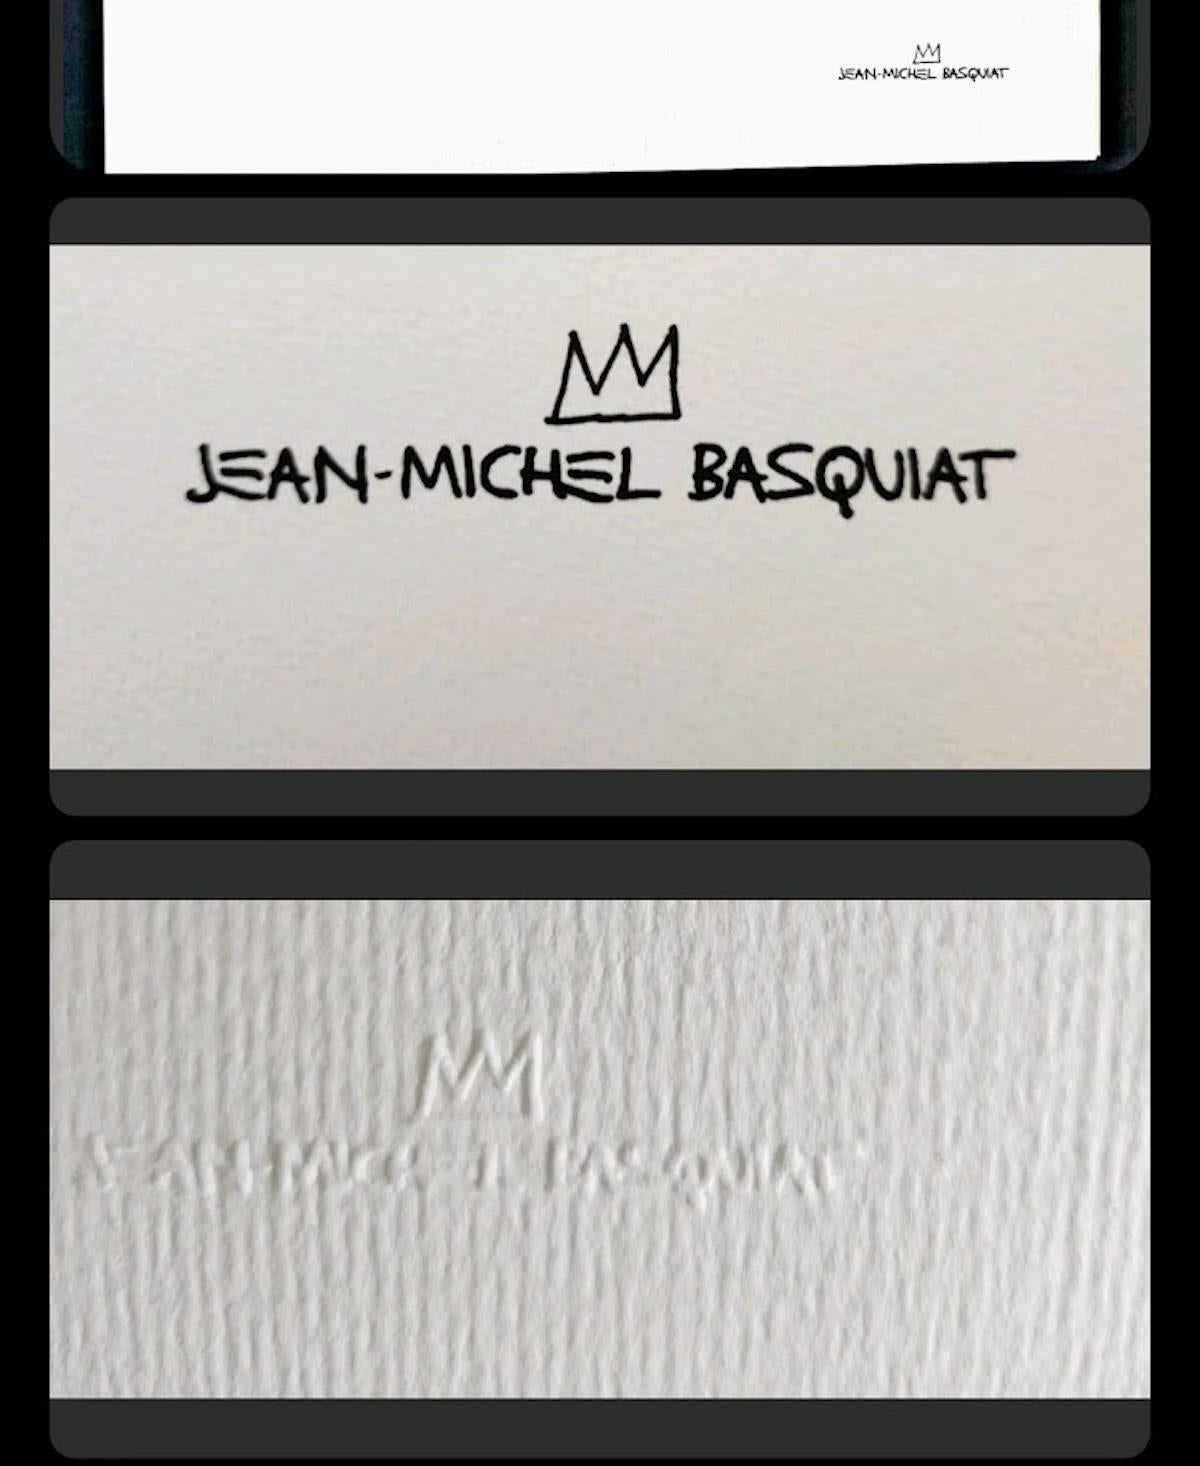 After Jean-Michel Basquiat, 